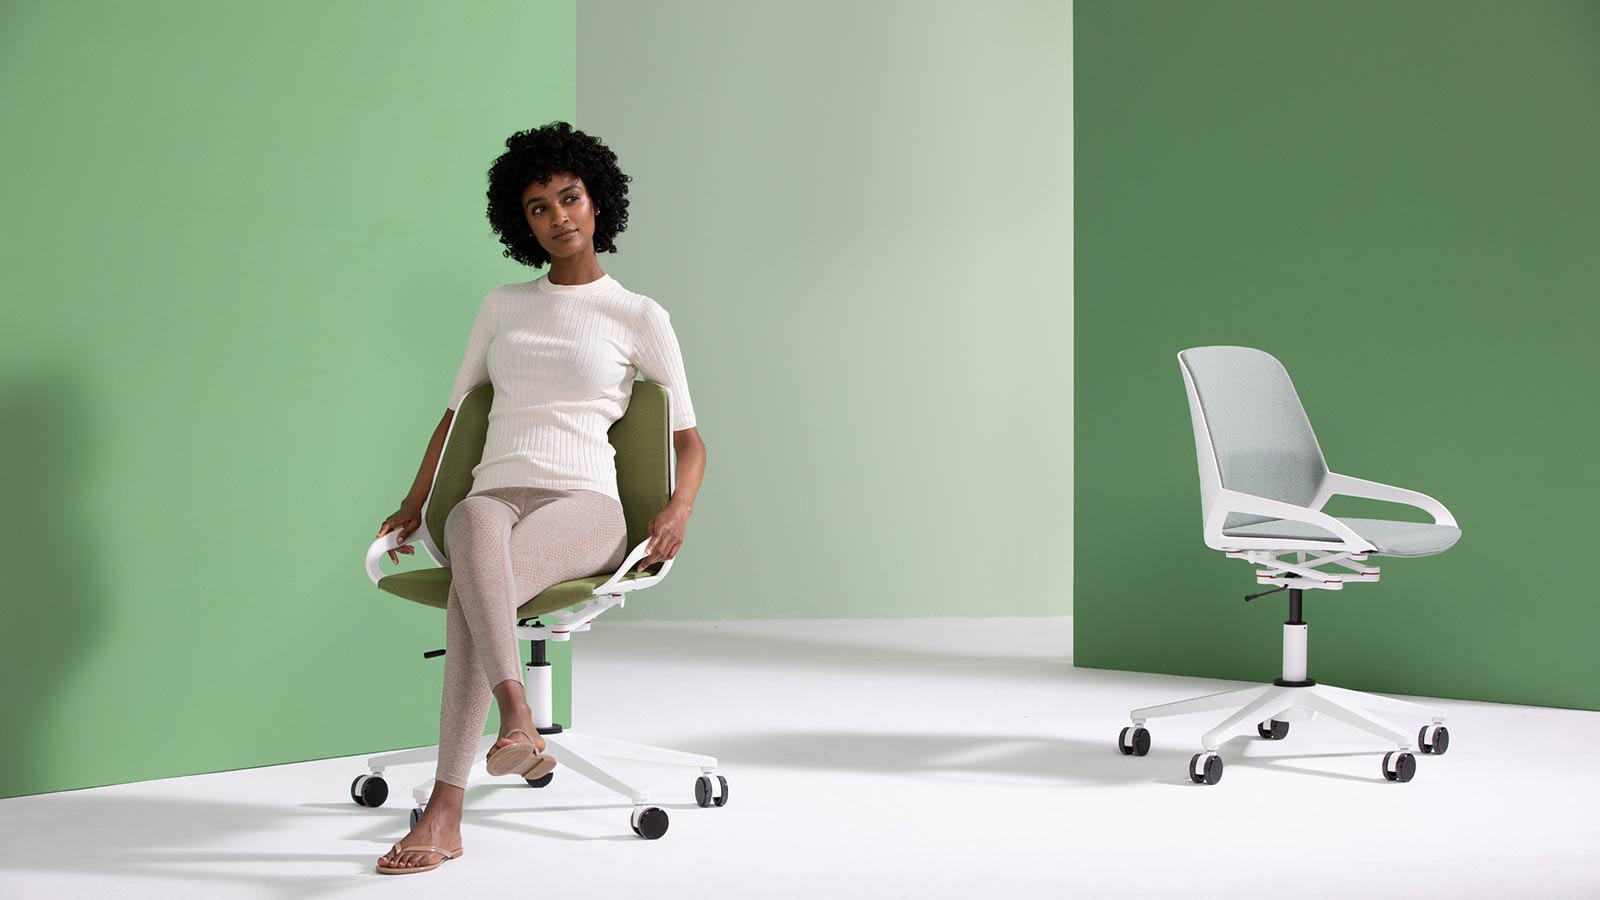 Bürostuhl Aeris Numo Task mit Frau auf Stuhl weißes Gestell Std. grün graue farbene Polster